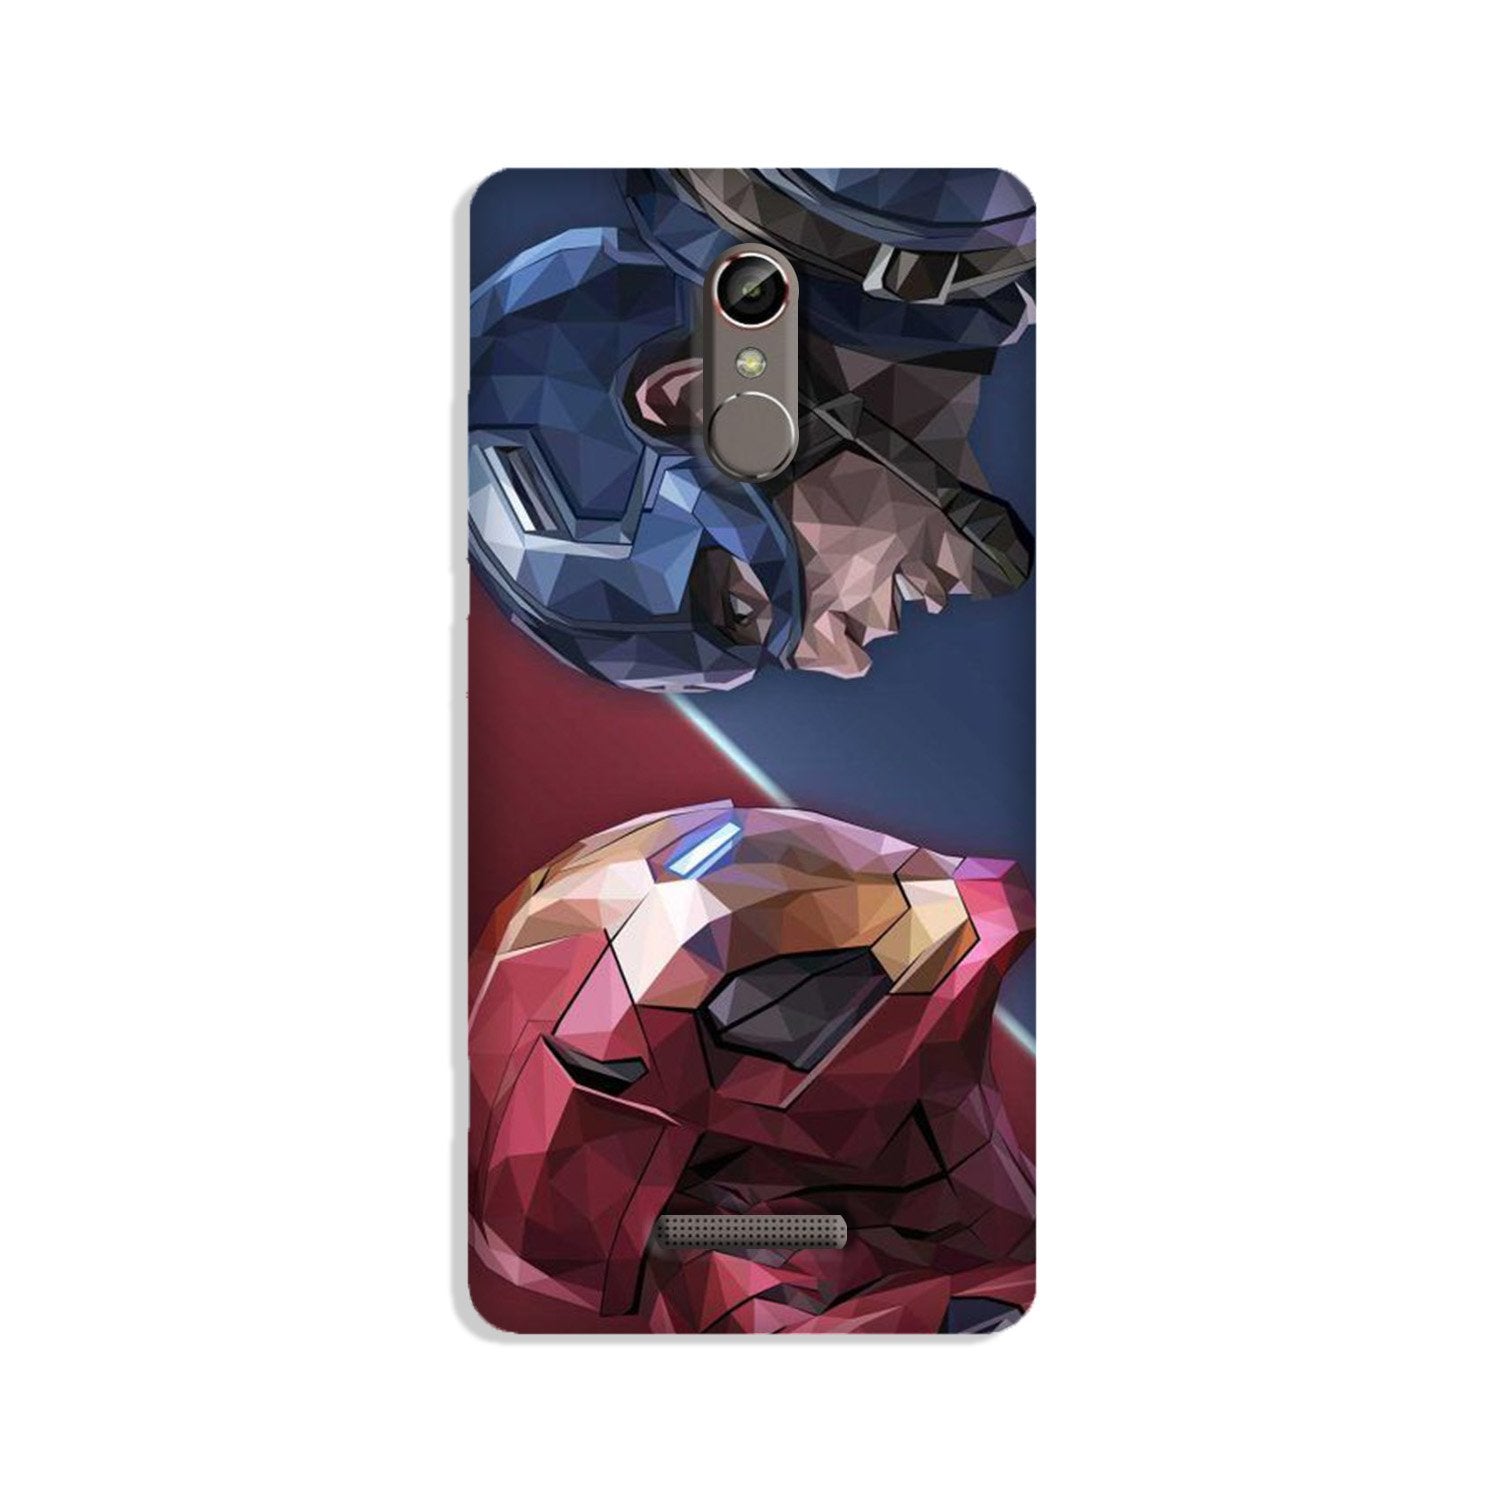 Ironman Captain America Case for Gionee S6s (Design No. 245)